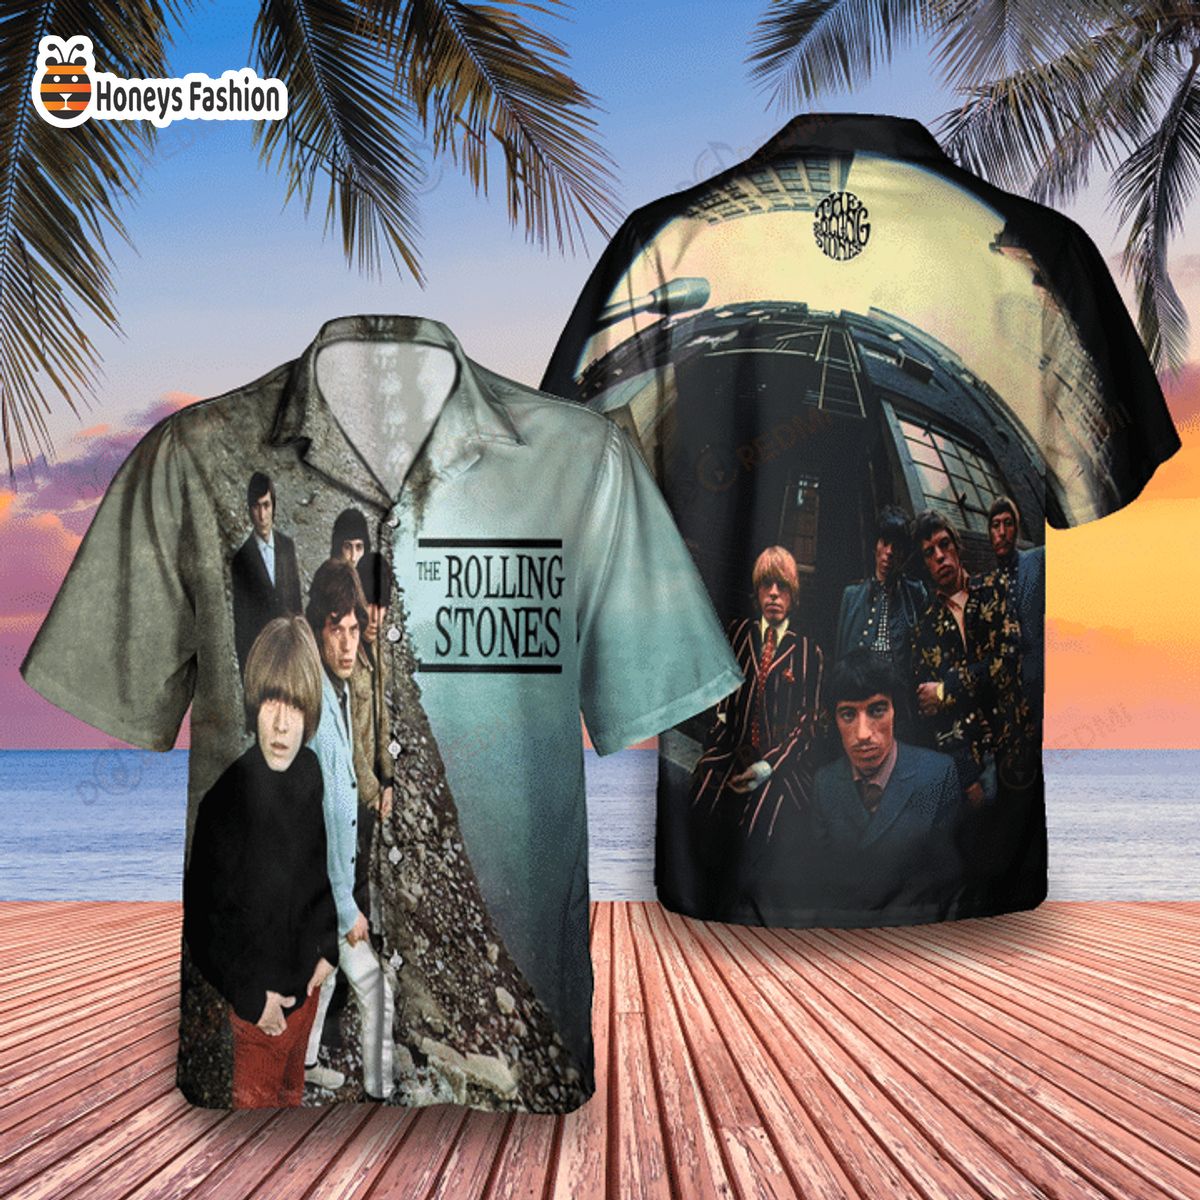 The Rolling Stones Rock Band album cover hawaiian shirt